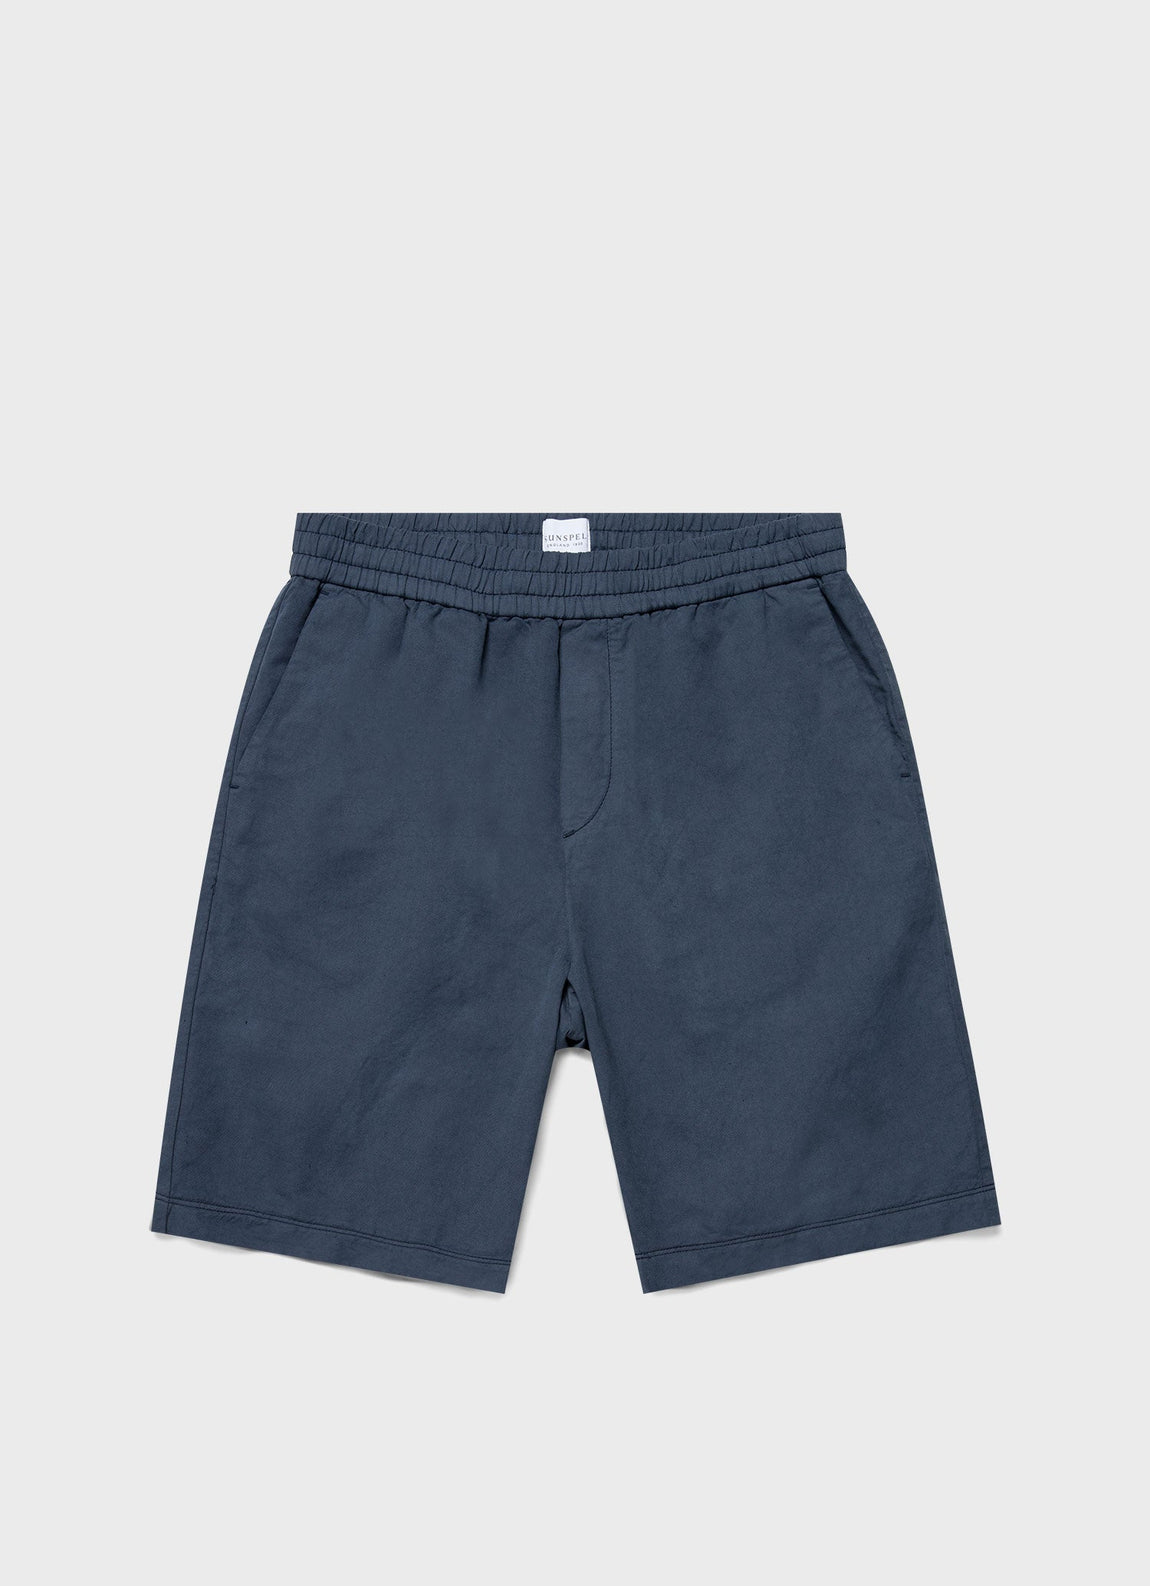 Men's Cotton Linen Drawstring Shorts in Shale Blue